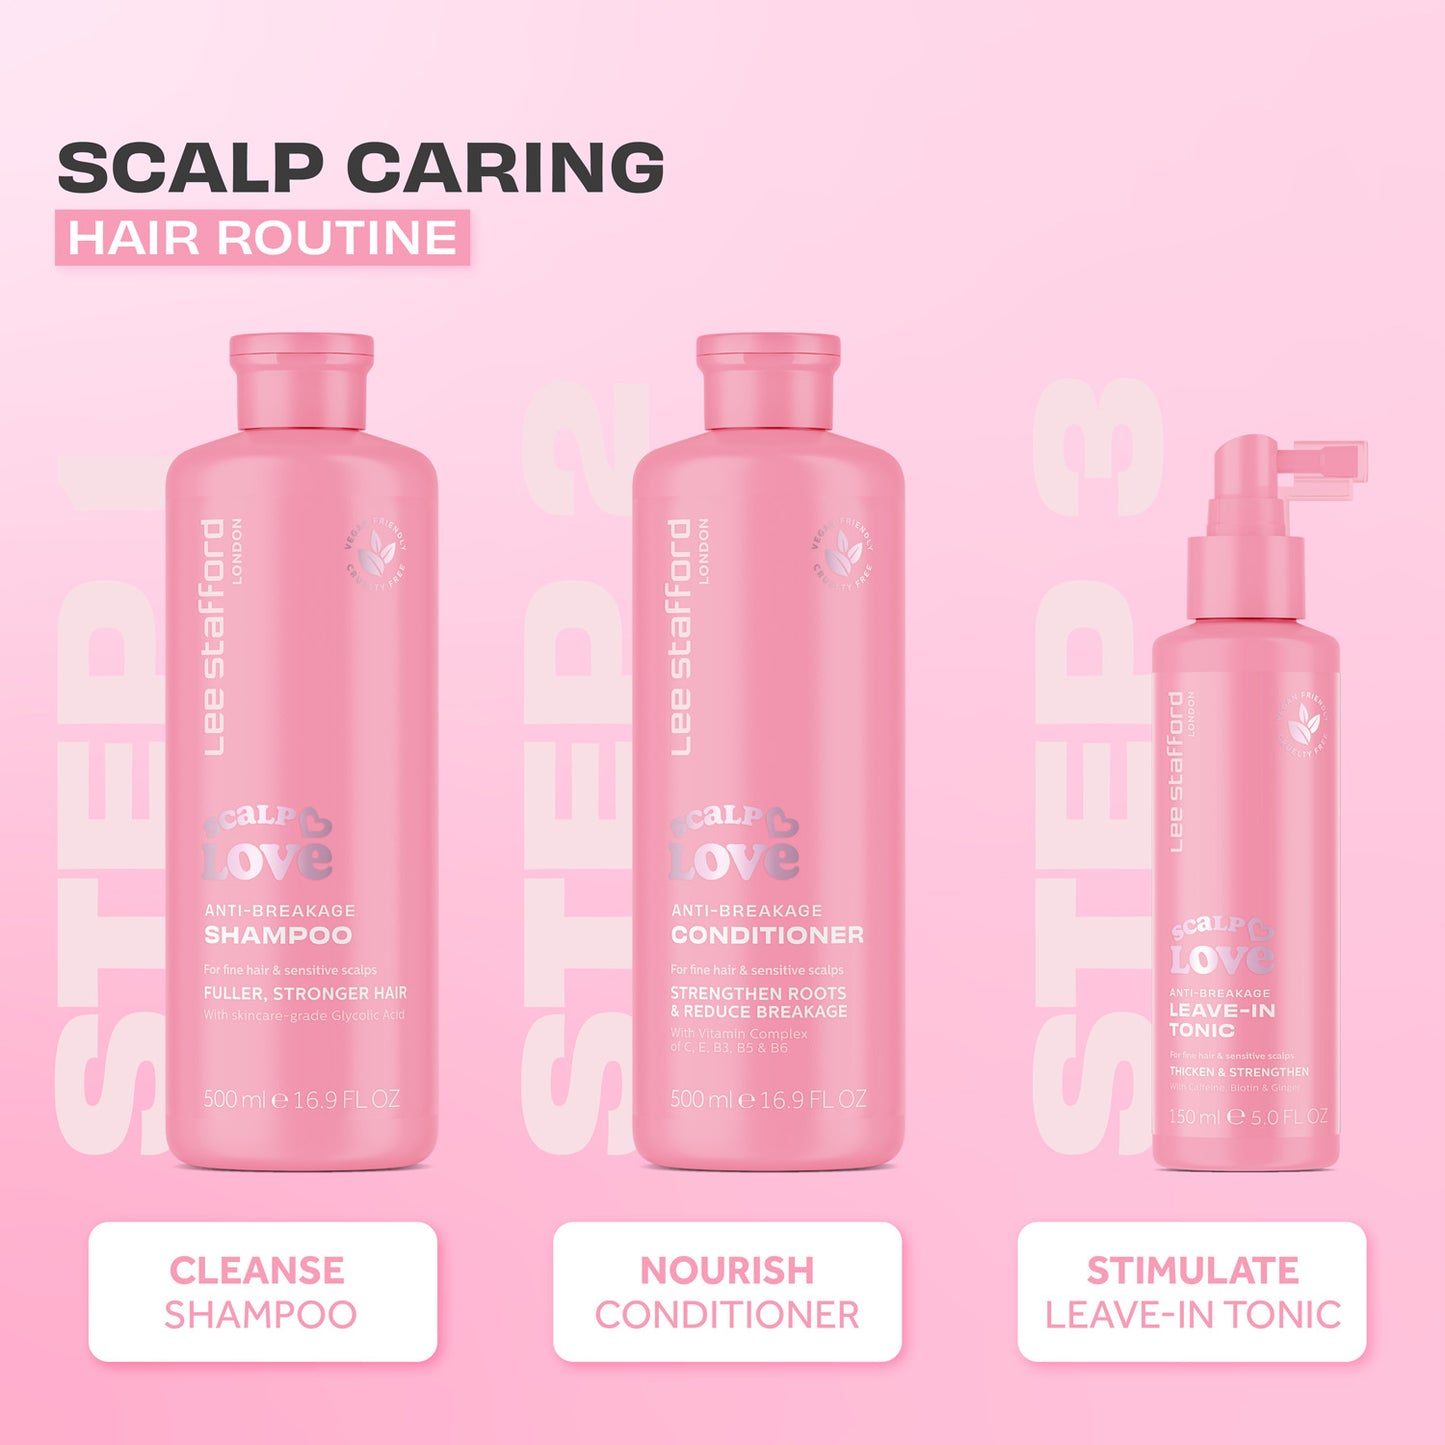 Scalp Love Anti-Breakage Shampoo